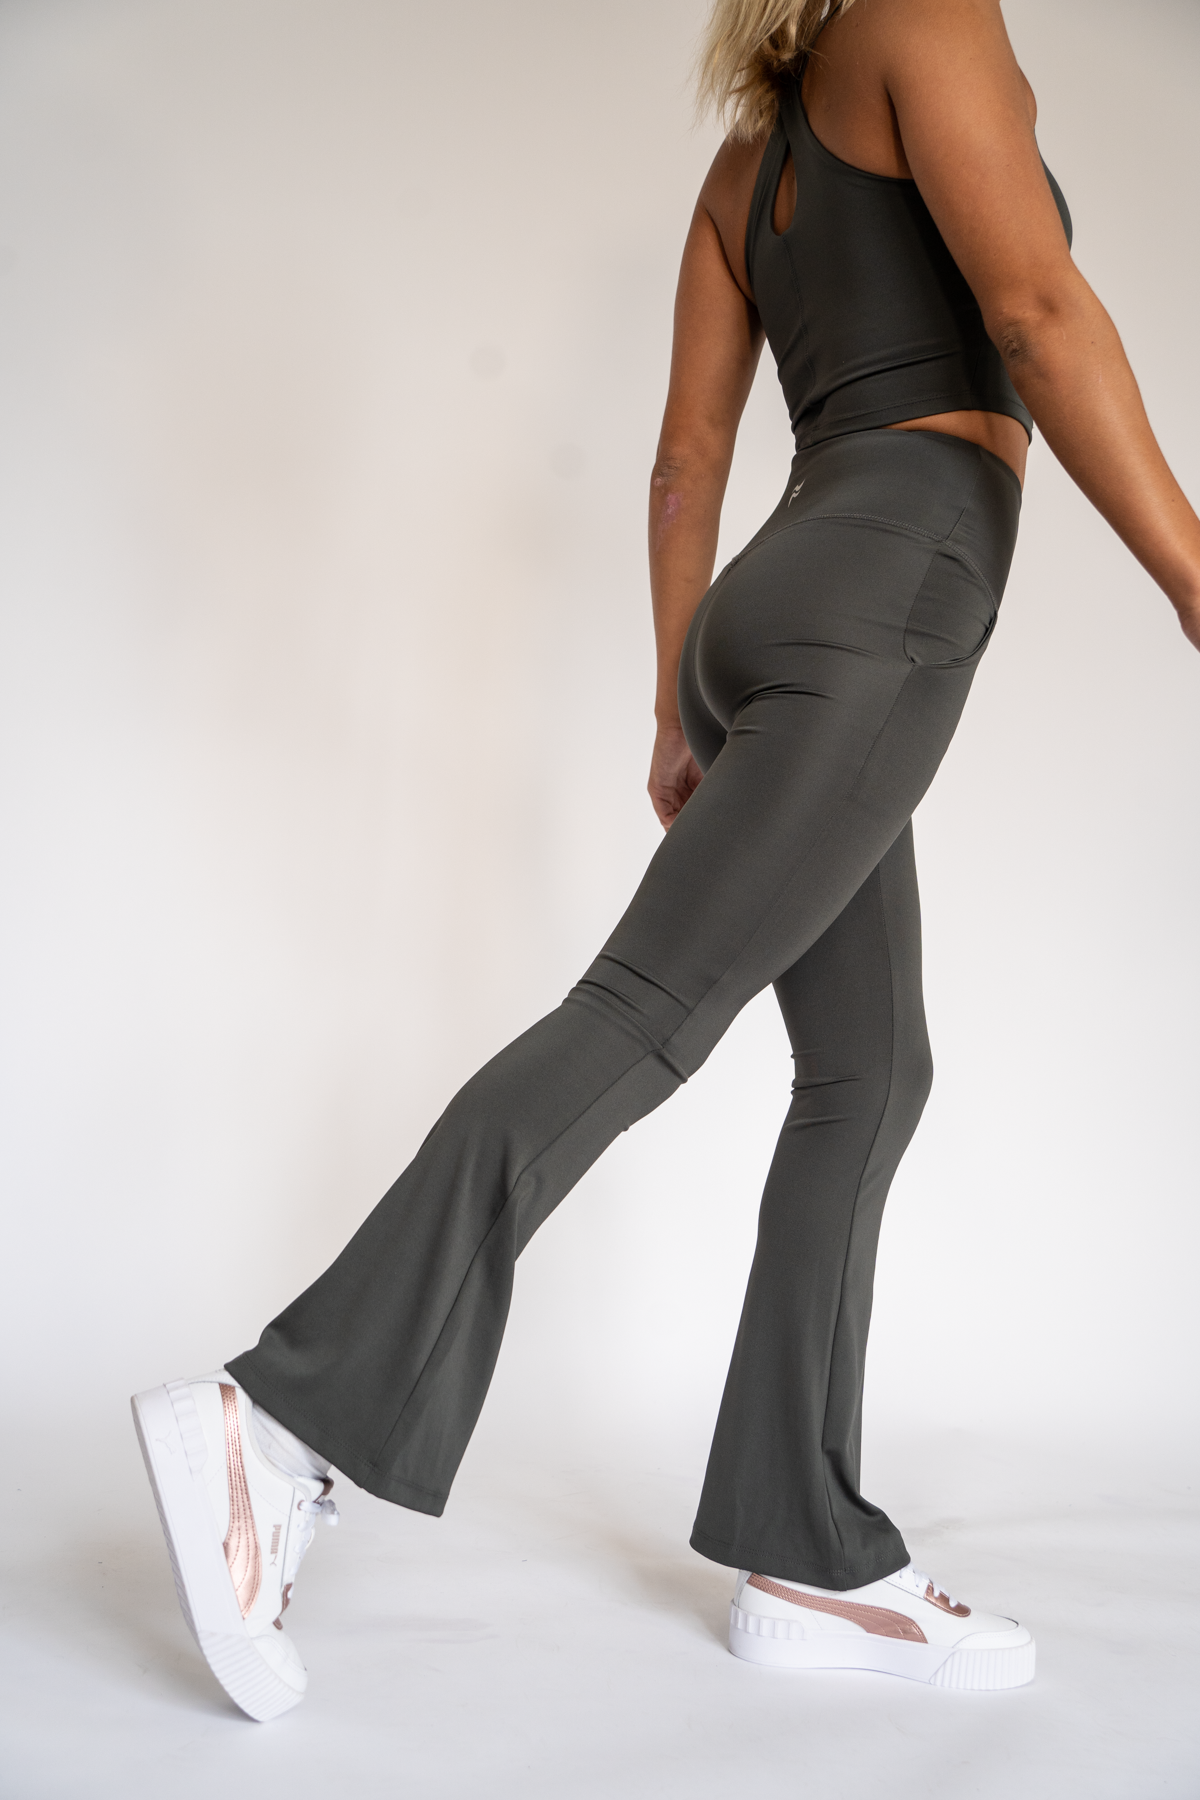 Athleta Women's Gray Gusset Coolmax Yoga Pants Flared Leggings Size Medium  10/12